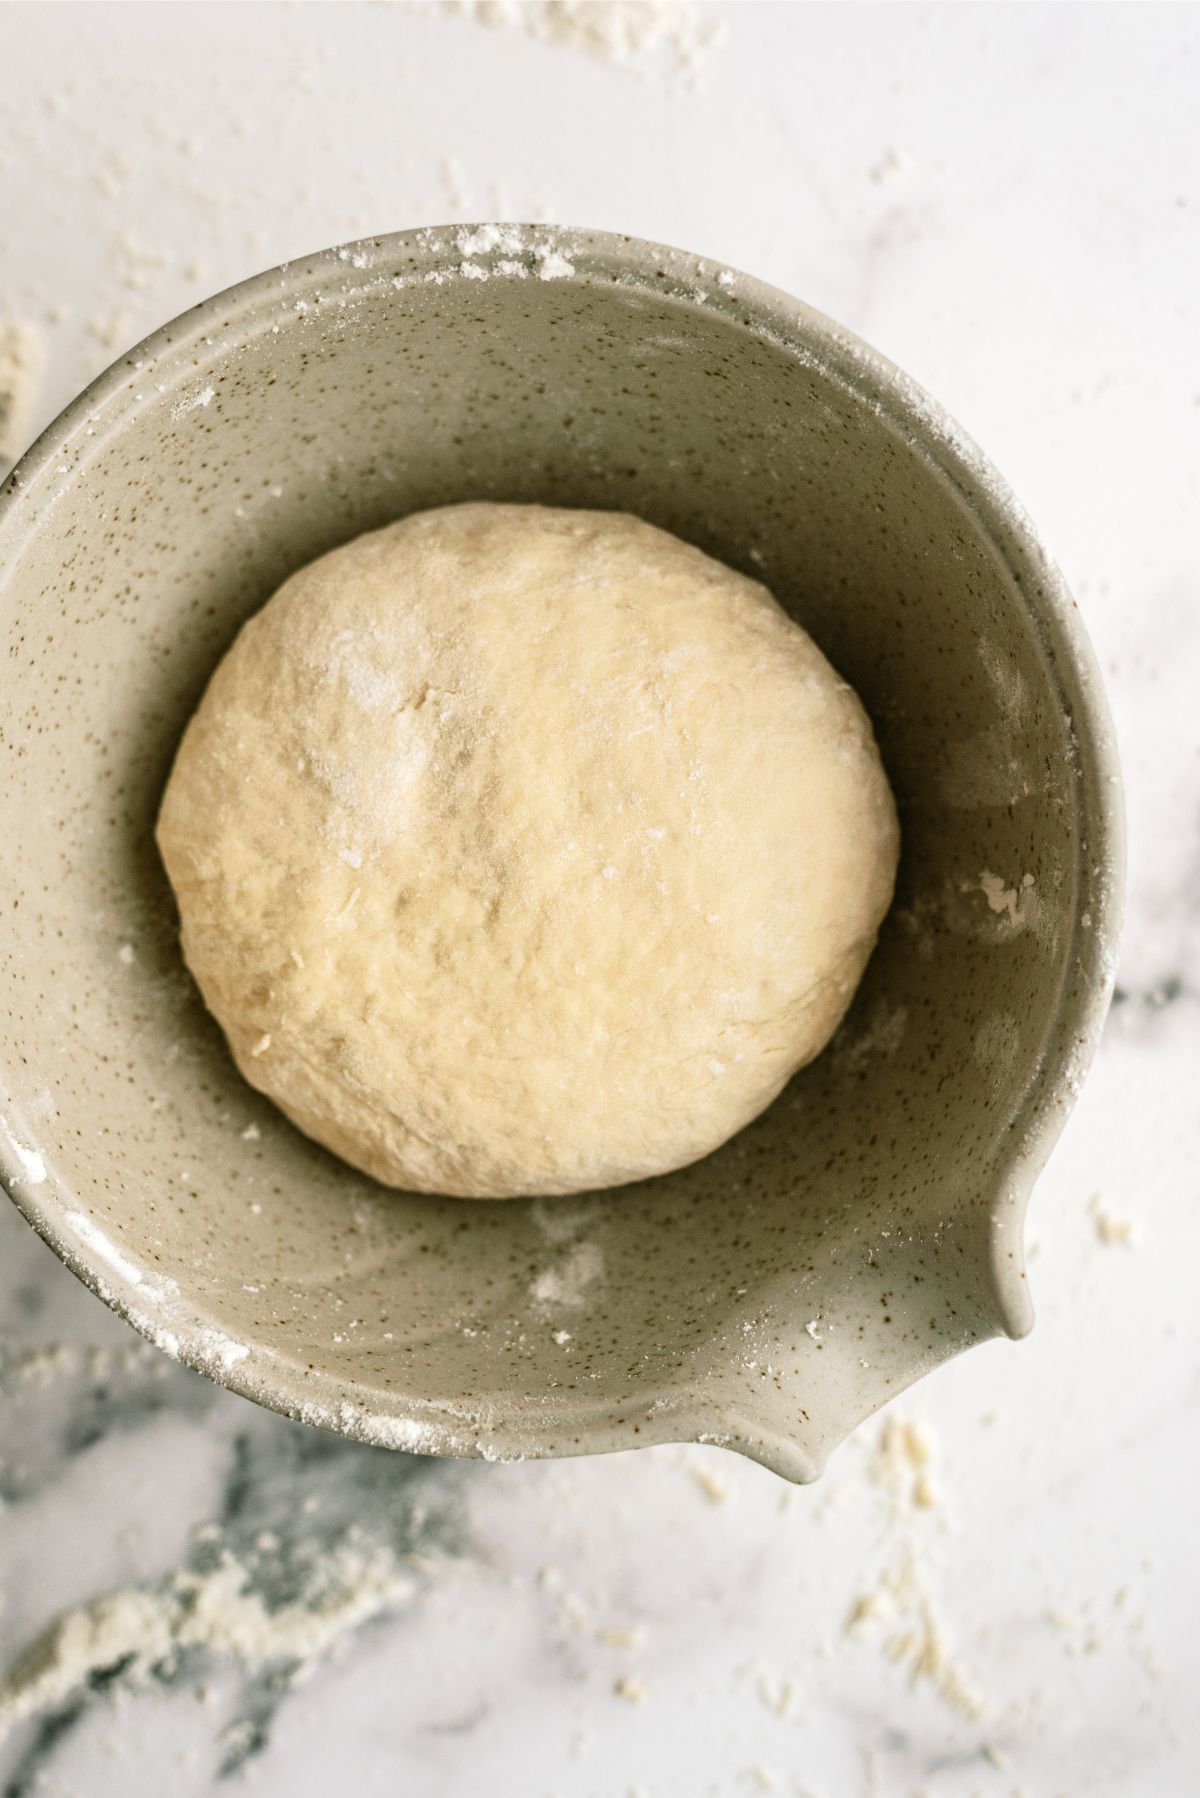 Pizza dough rising in mixing bowl